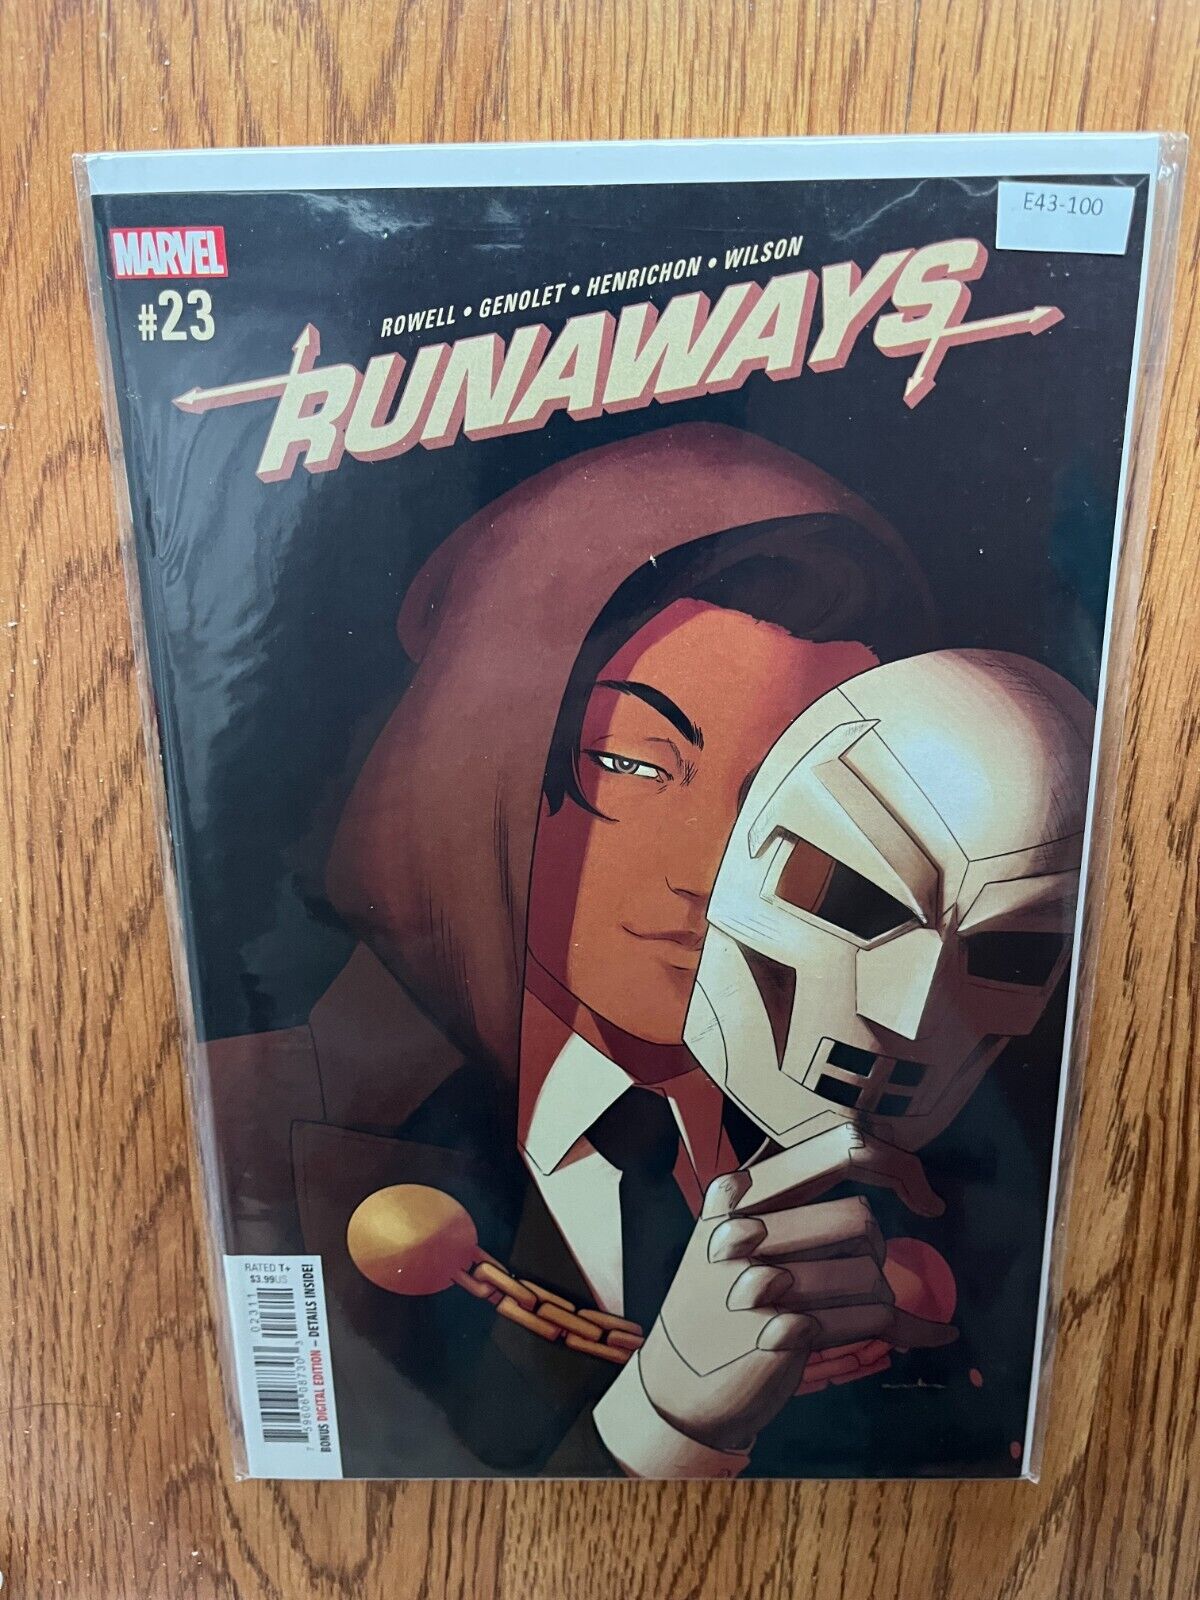 Runaways 23 Marvel Comics 9.4 E43-100